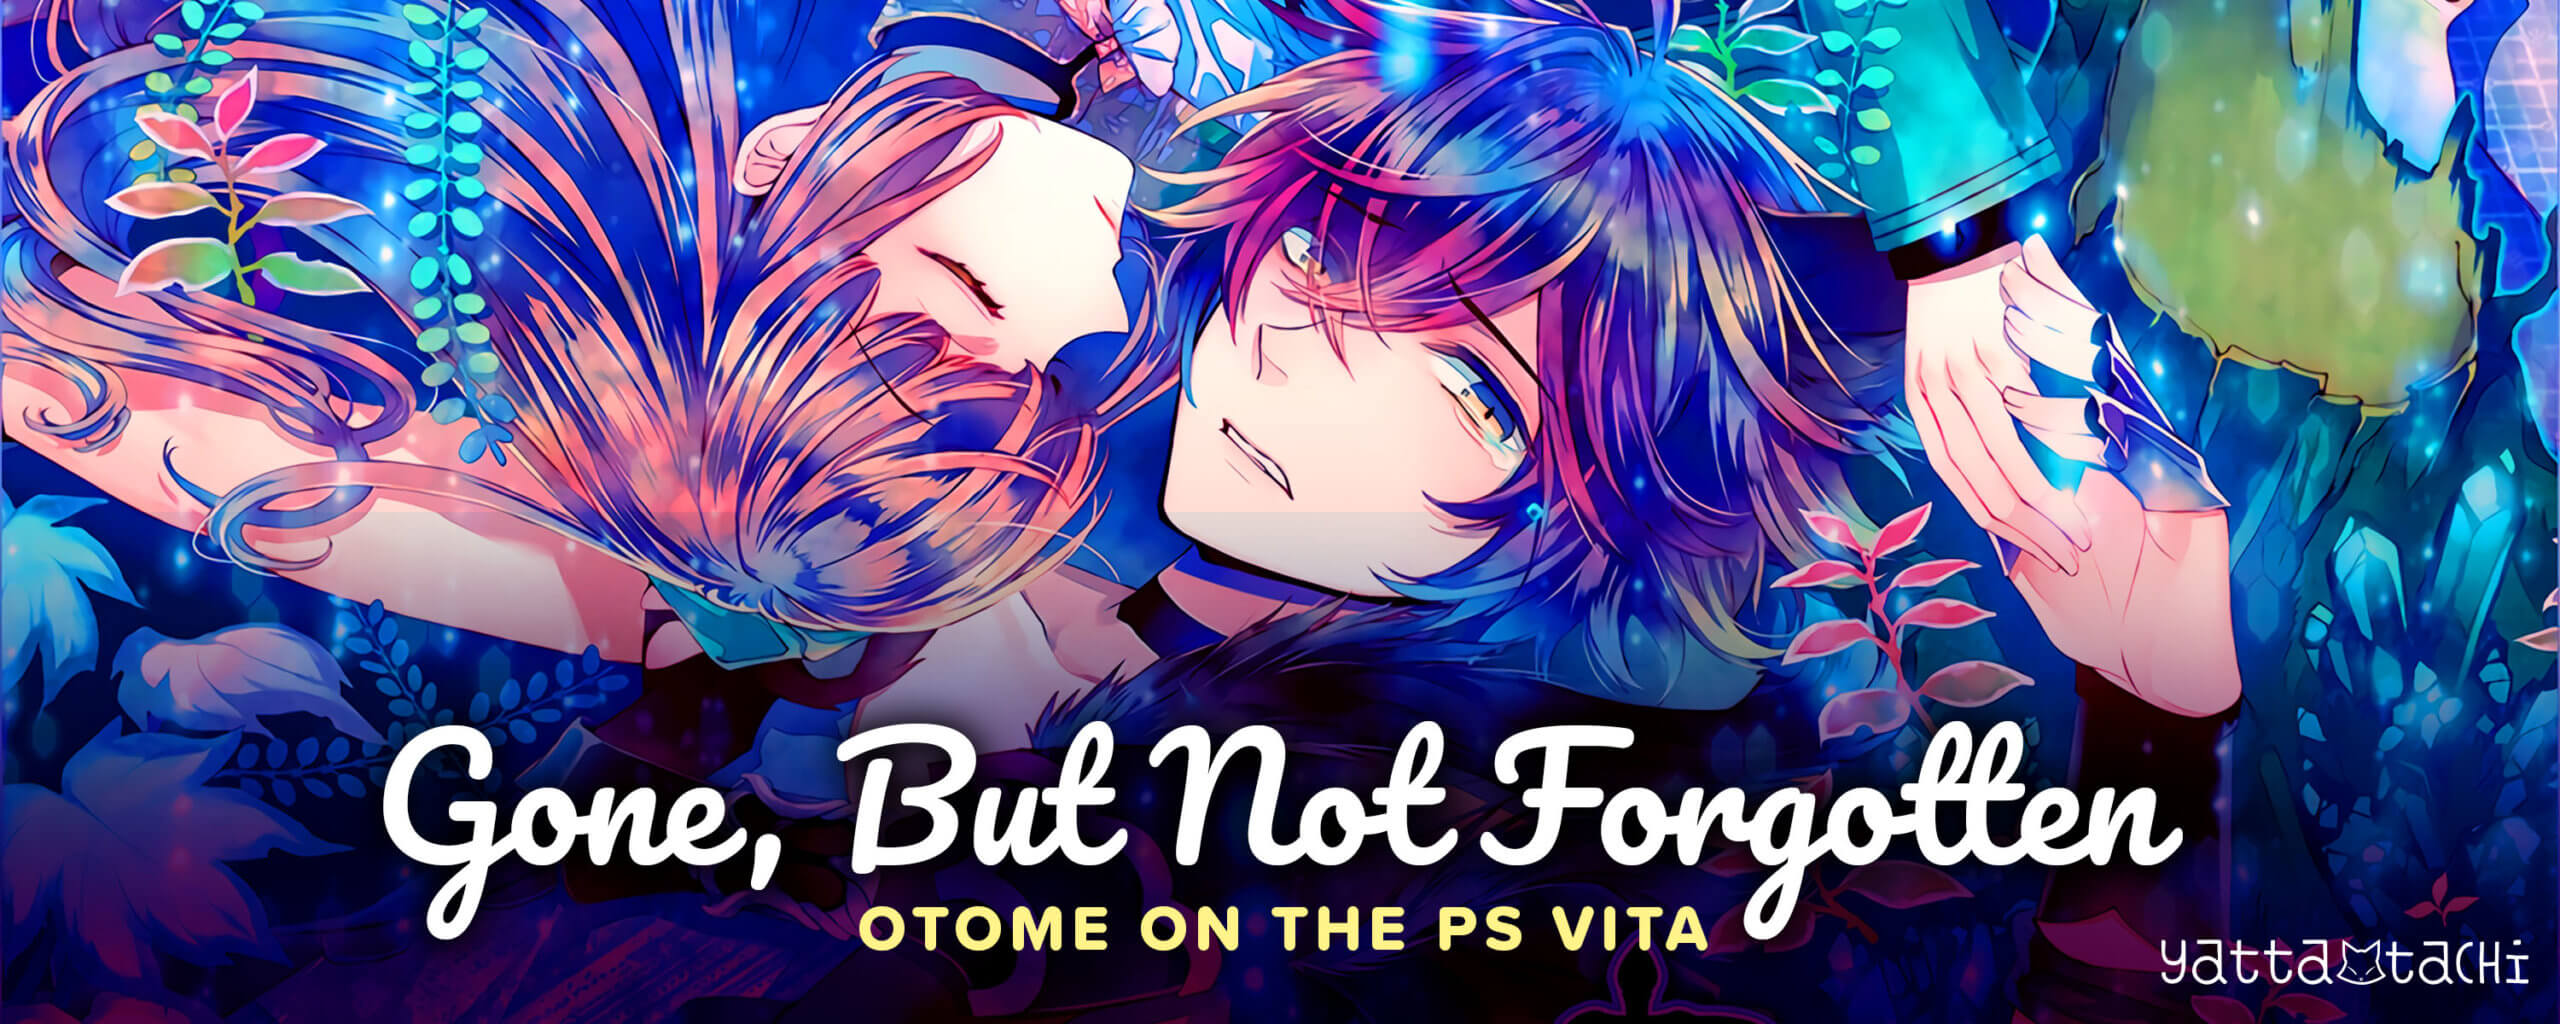 Gone, but not forgotten: Otome on the PS Vita | Yatta-Tachi